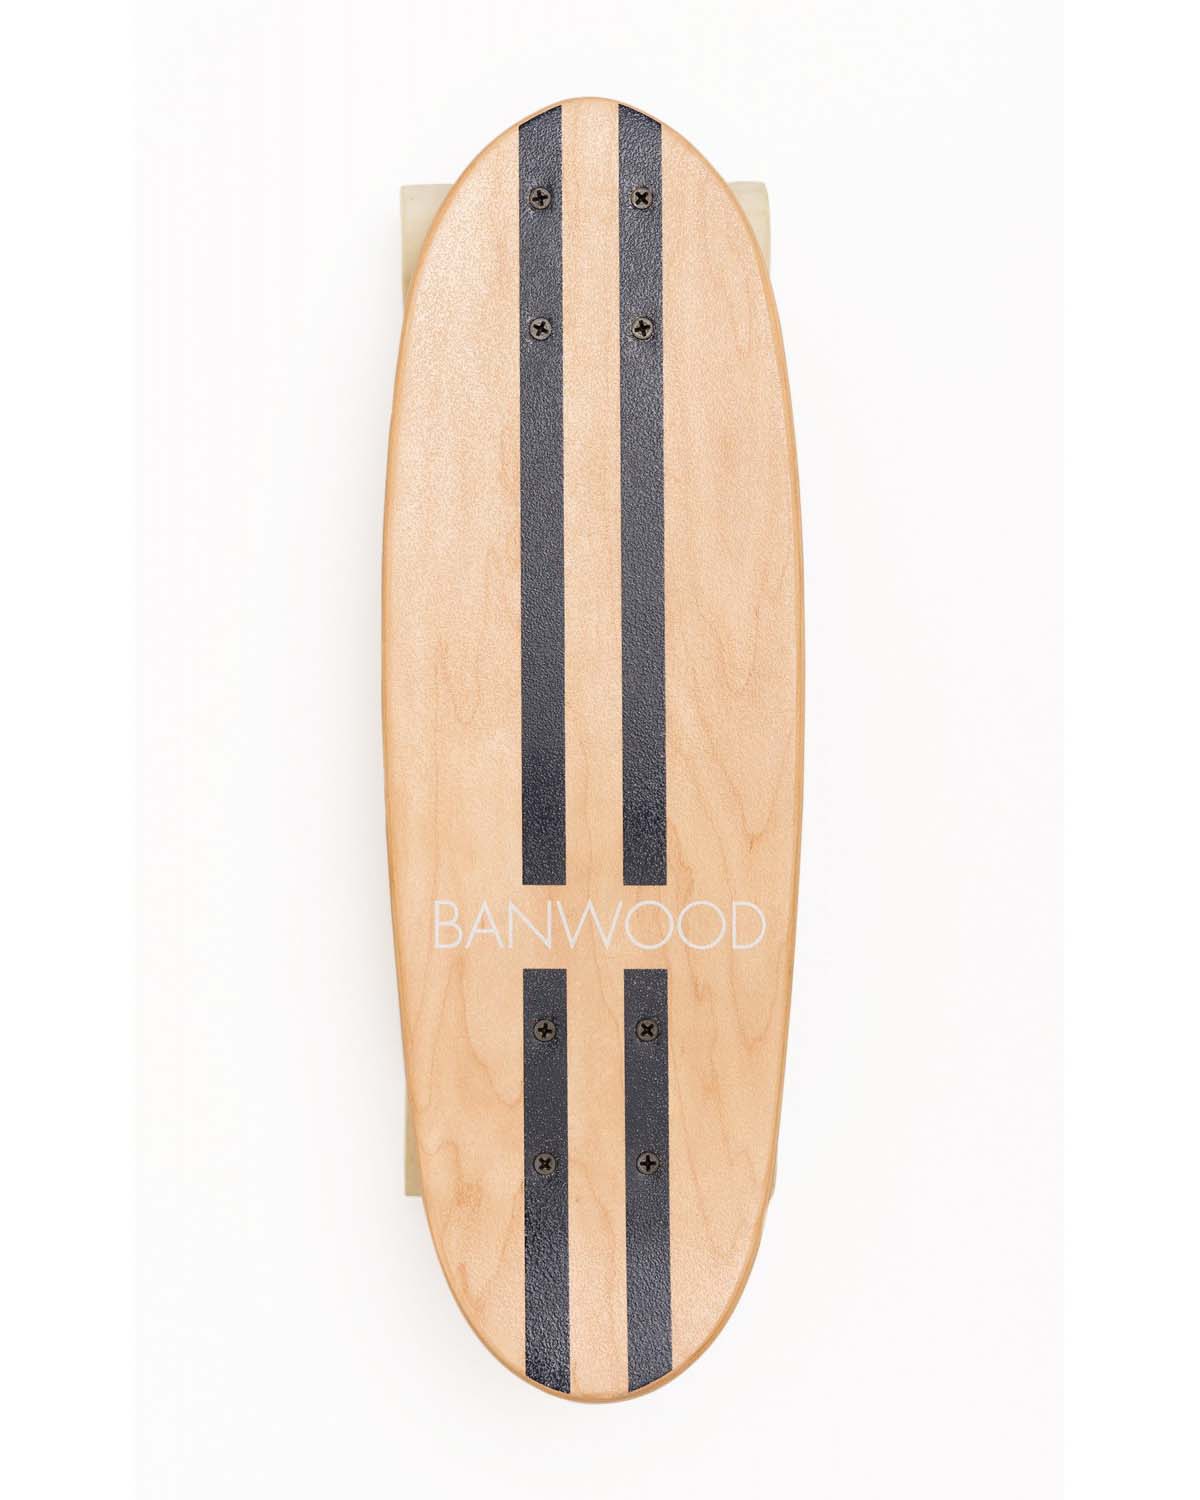 Little banwood play banwood skateboard in navy